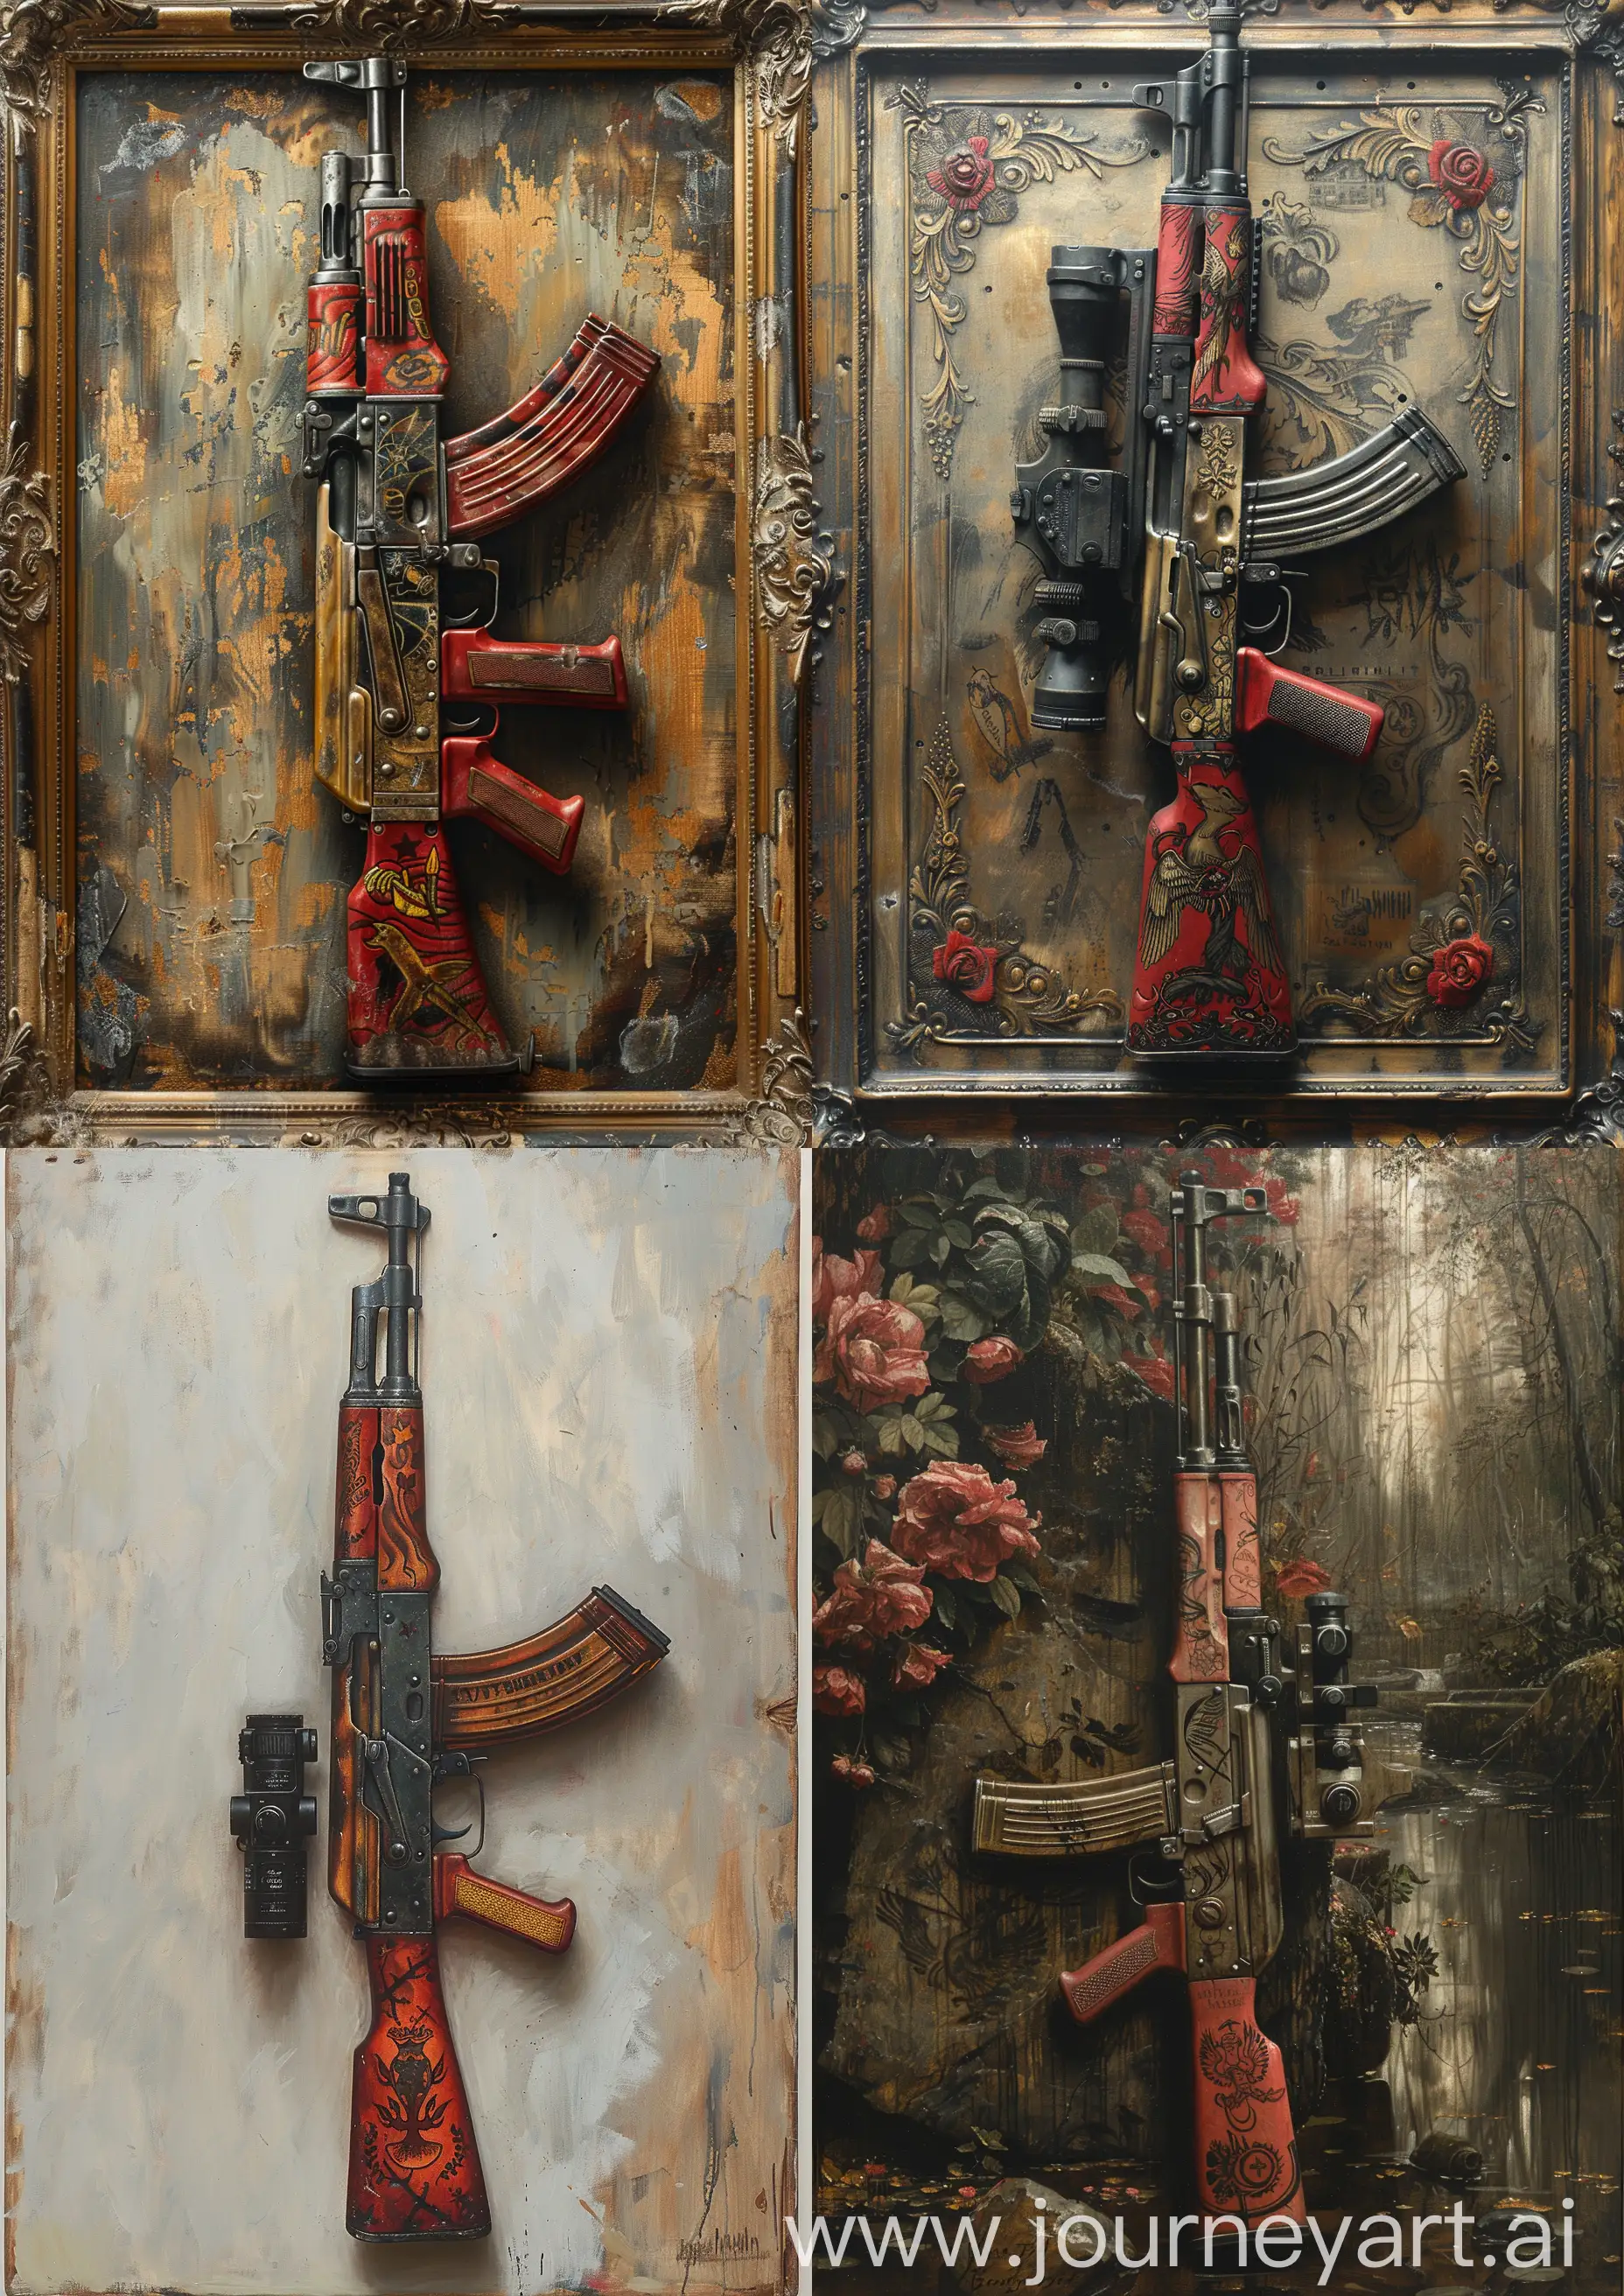 Edward-BurneJones-Tattooed-Kalashnikov-Rifle-Artwork-with-High-Tones-and-Detail